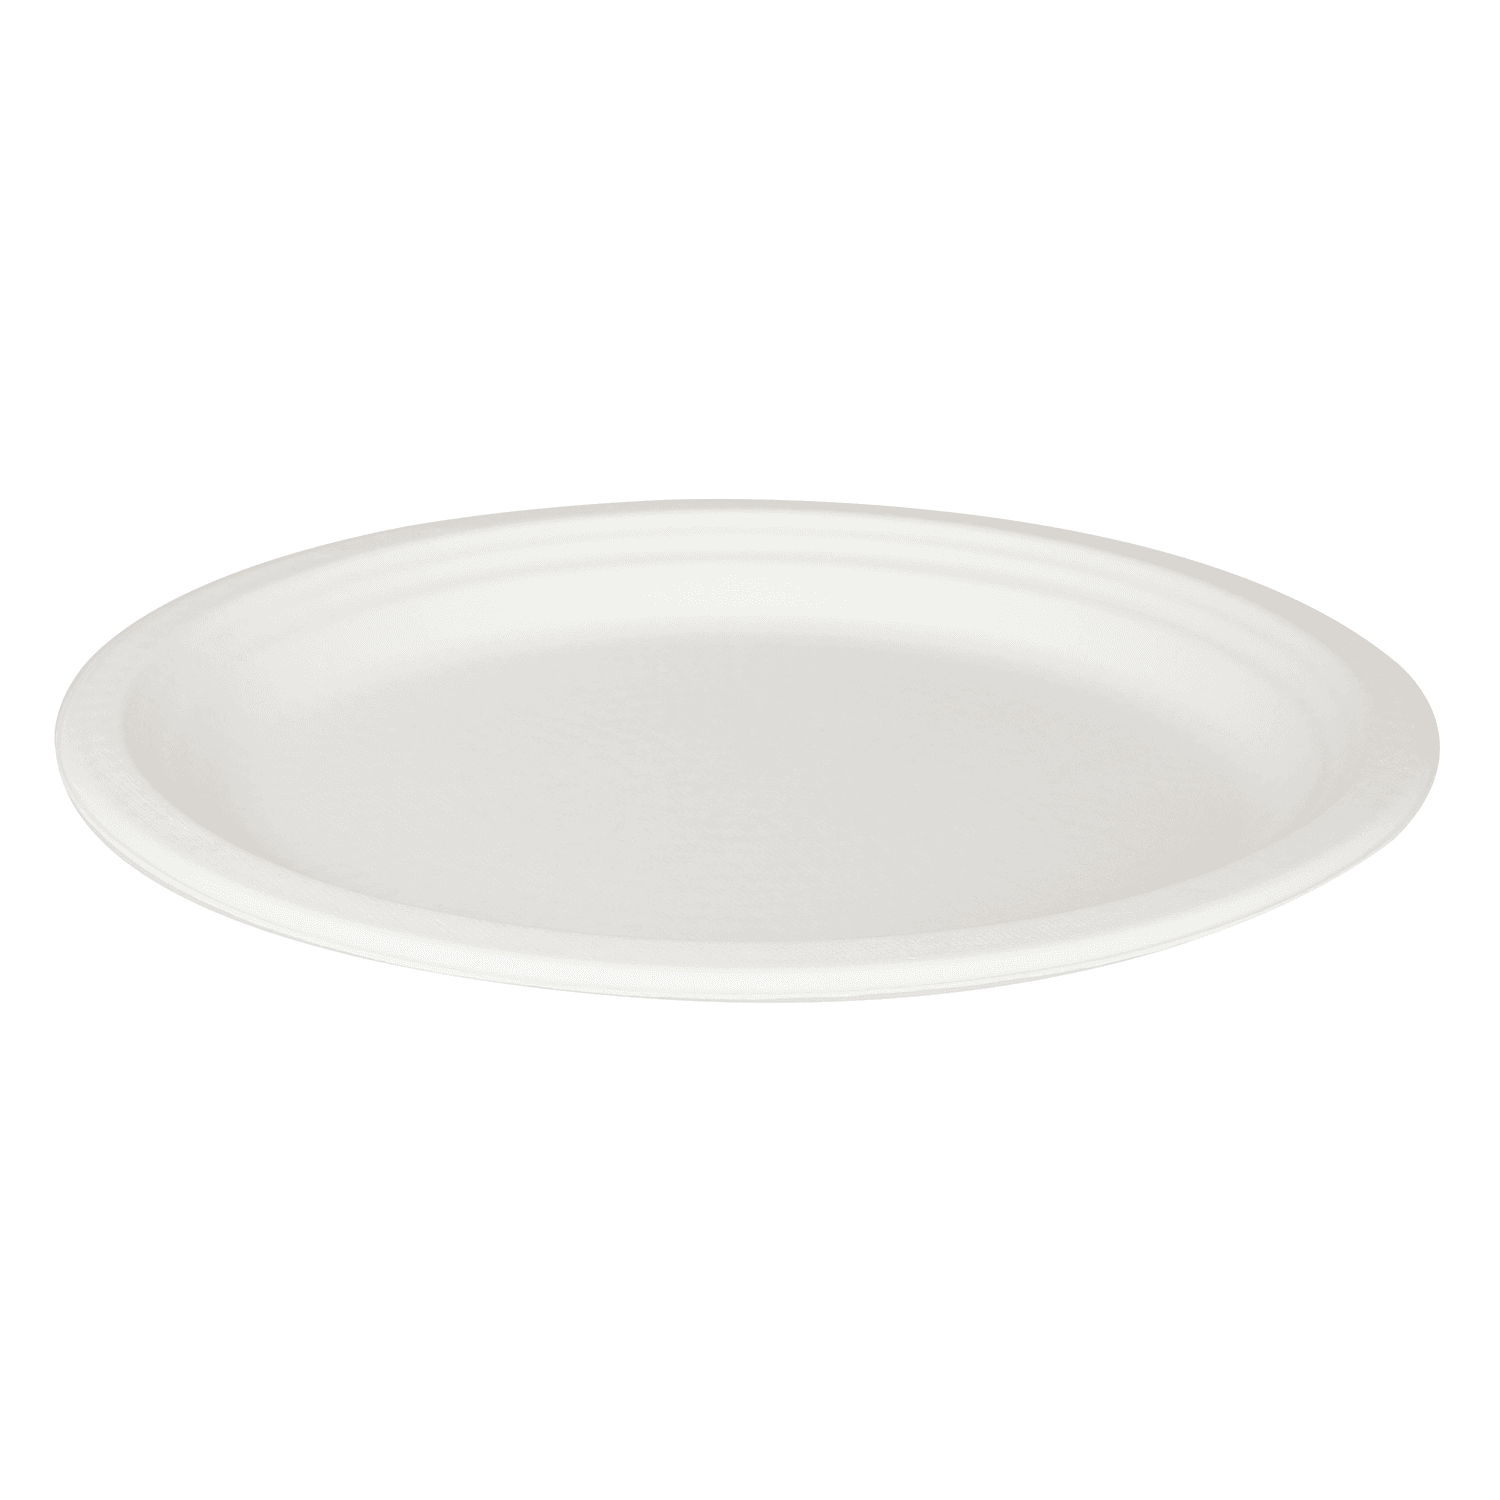 Karat Earth 12.5''x10'' PFAS Free Compostable Bagasse Oval Plates, White - 500 pcs